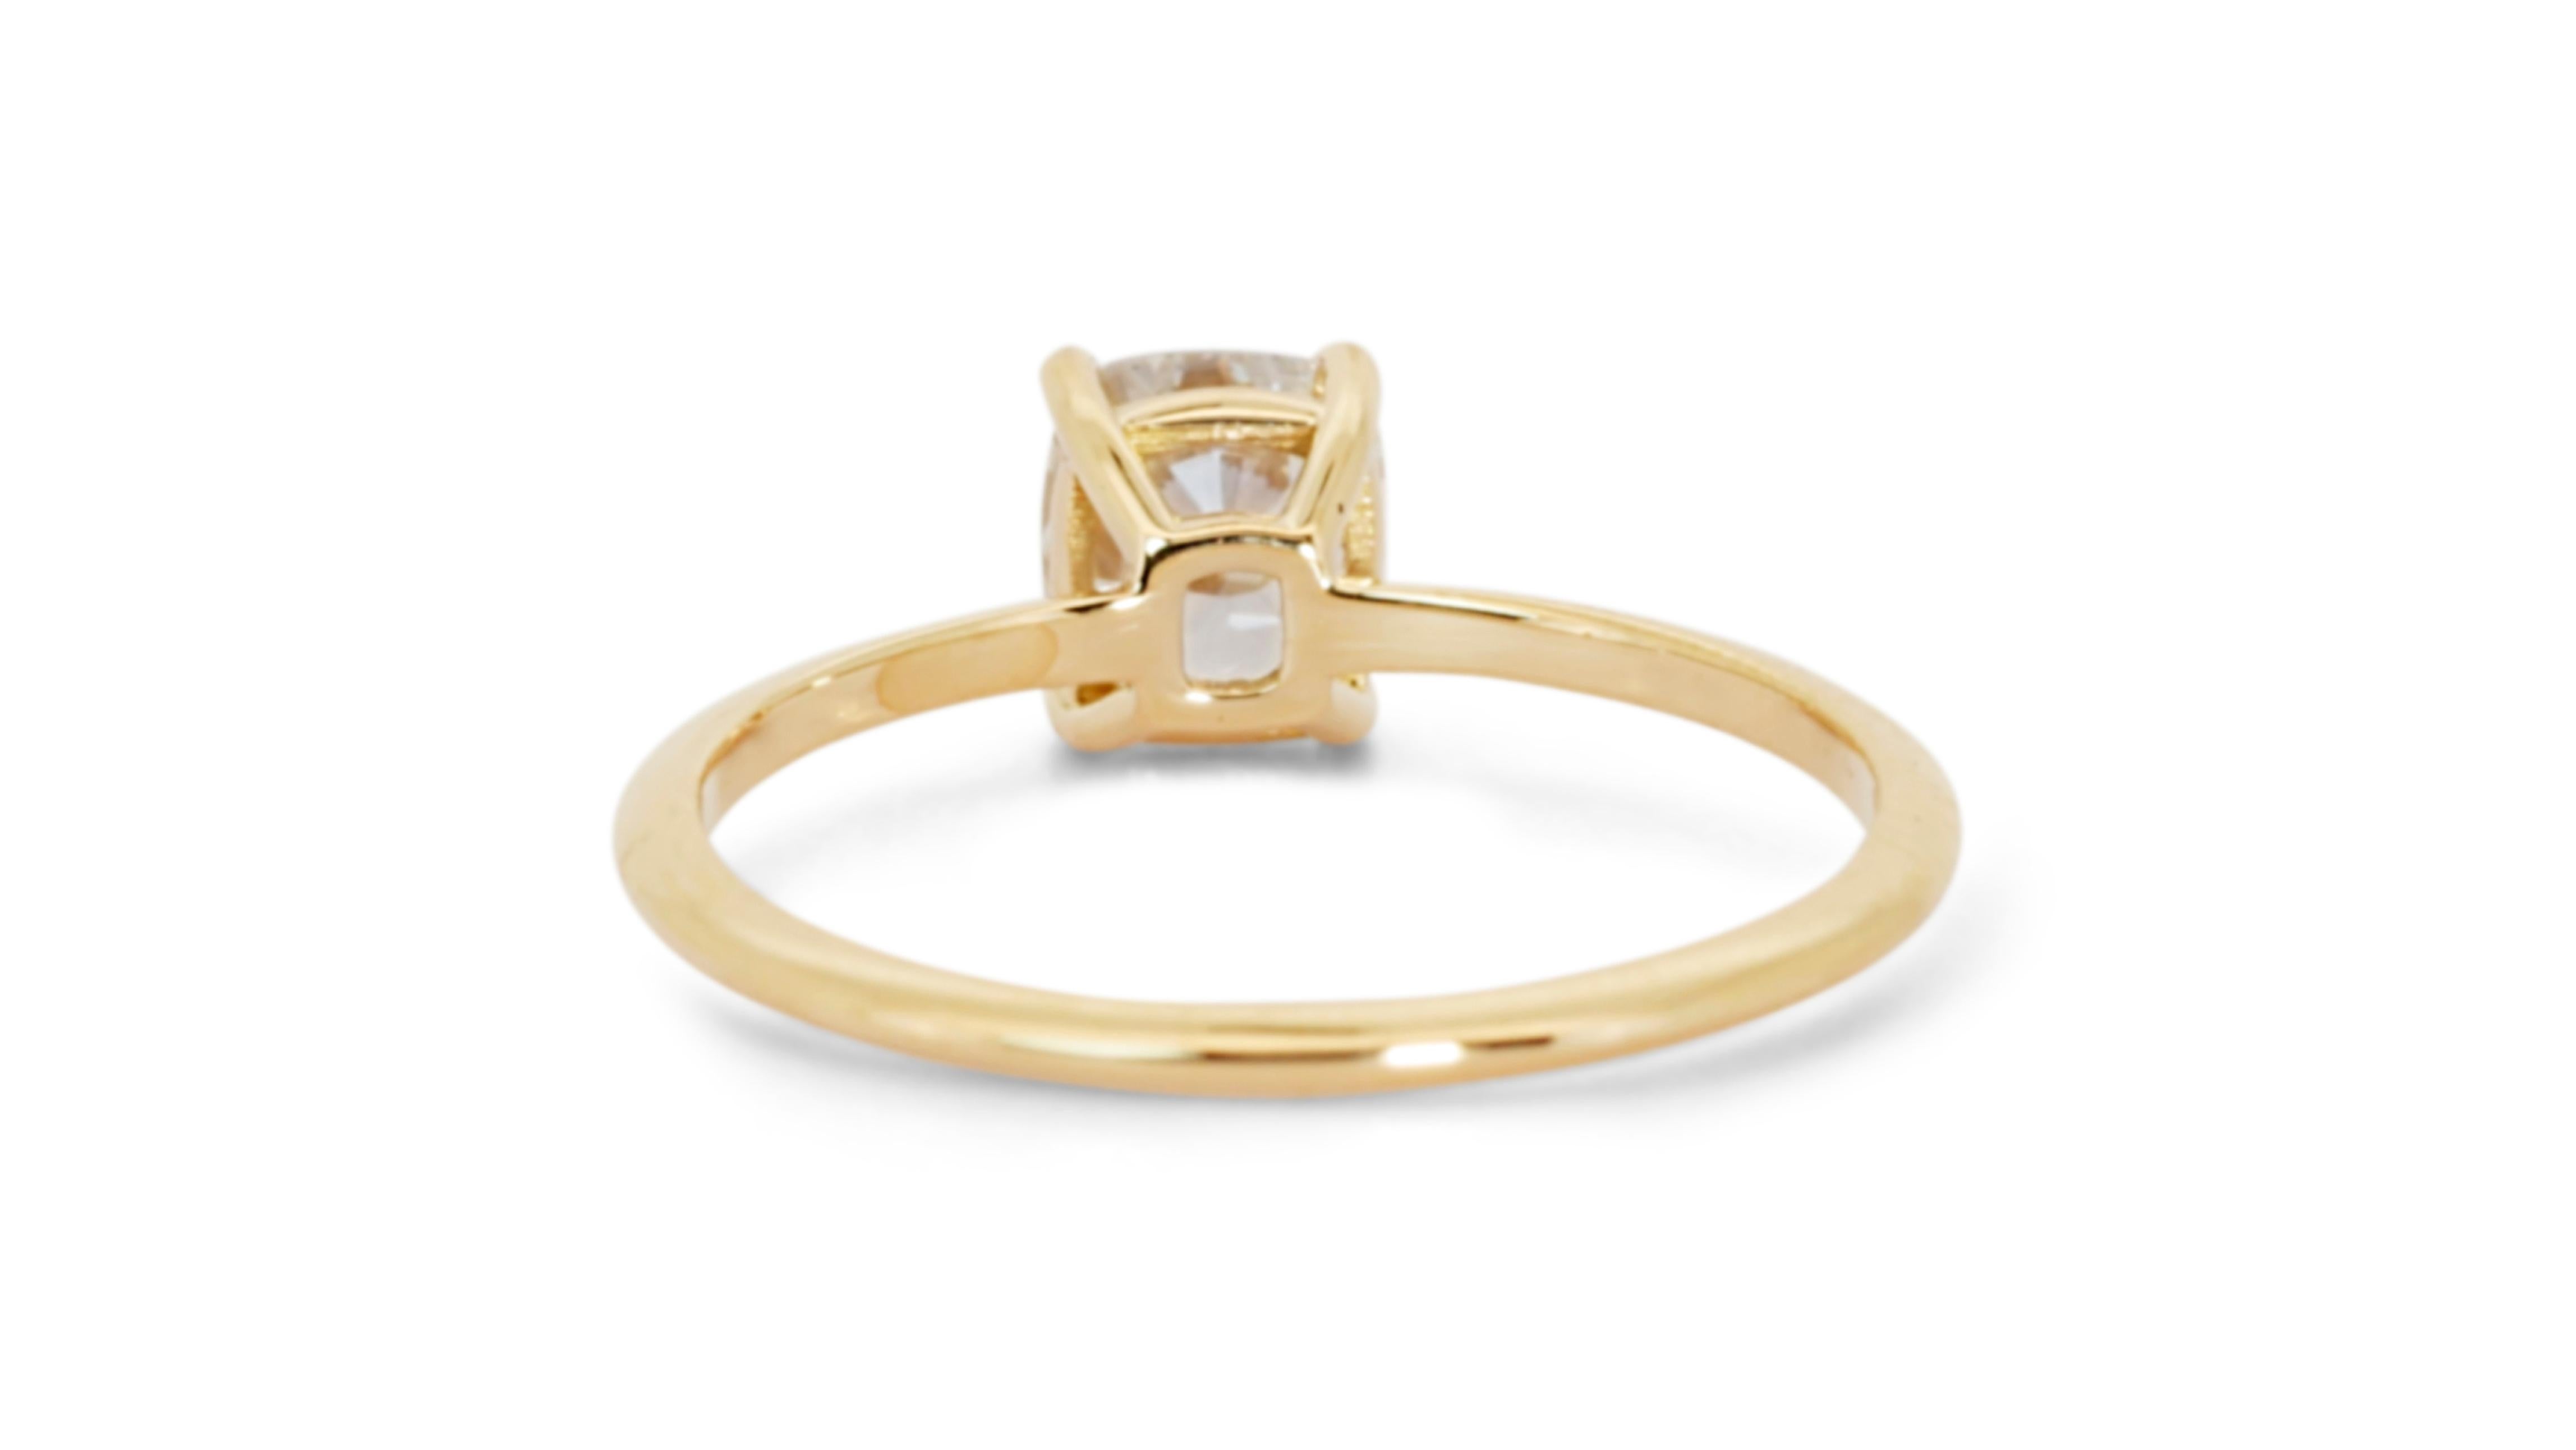 Glamorous 18k Yellow Gold Solitaire Ring w/ 1.02 Carat Natural Diamonds IGI Cert For Sale 2